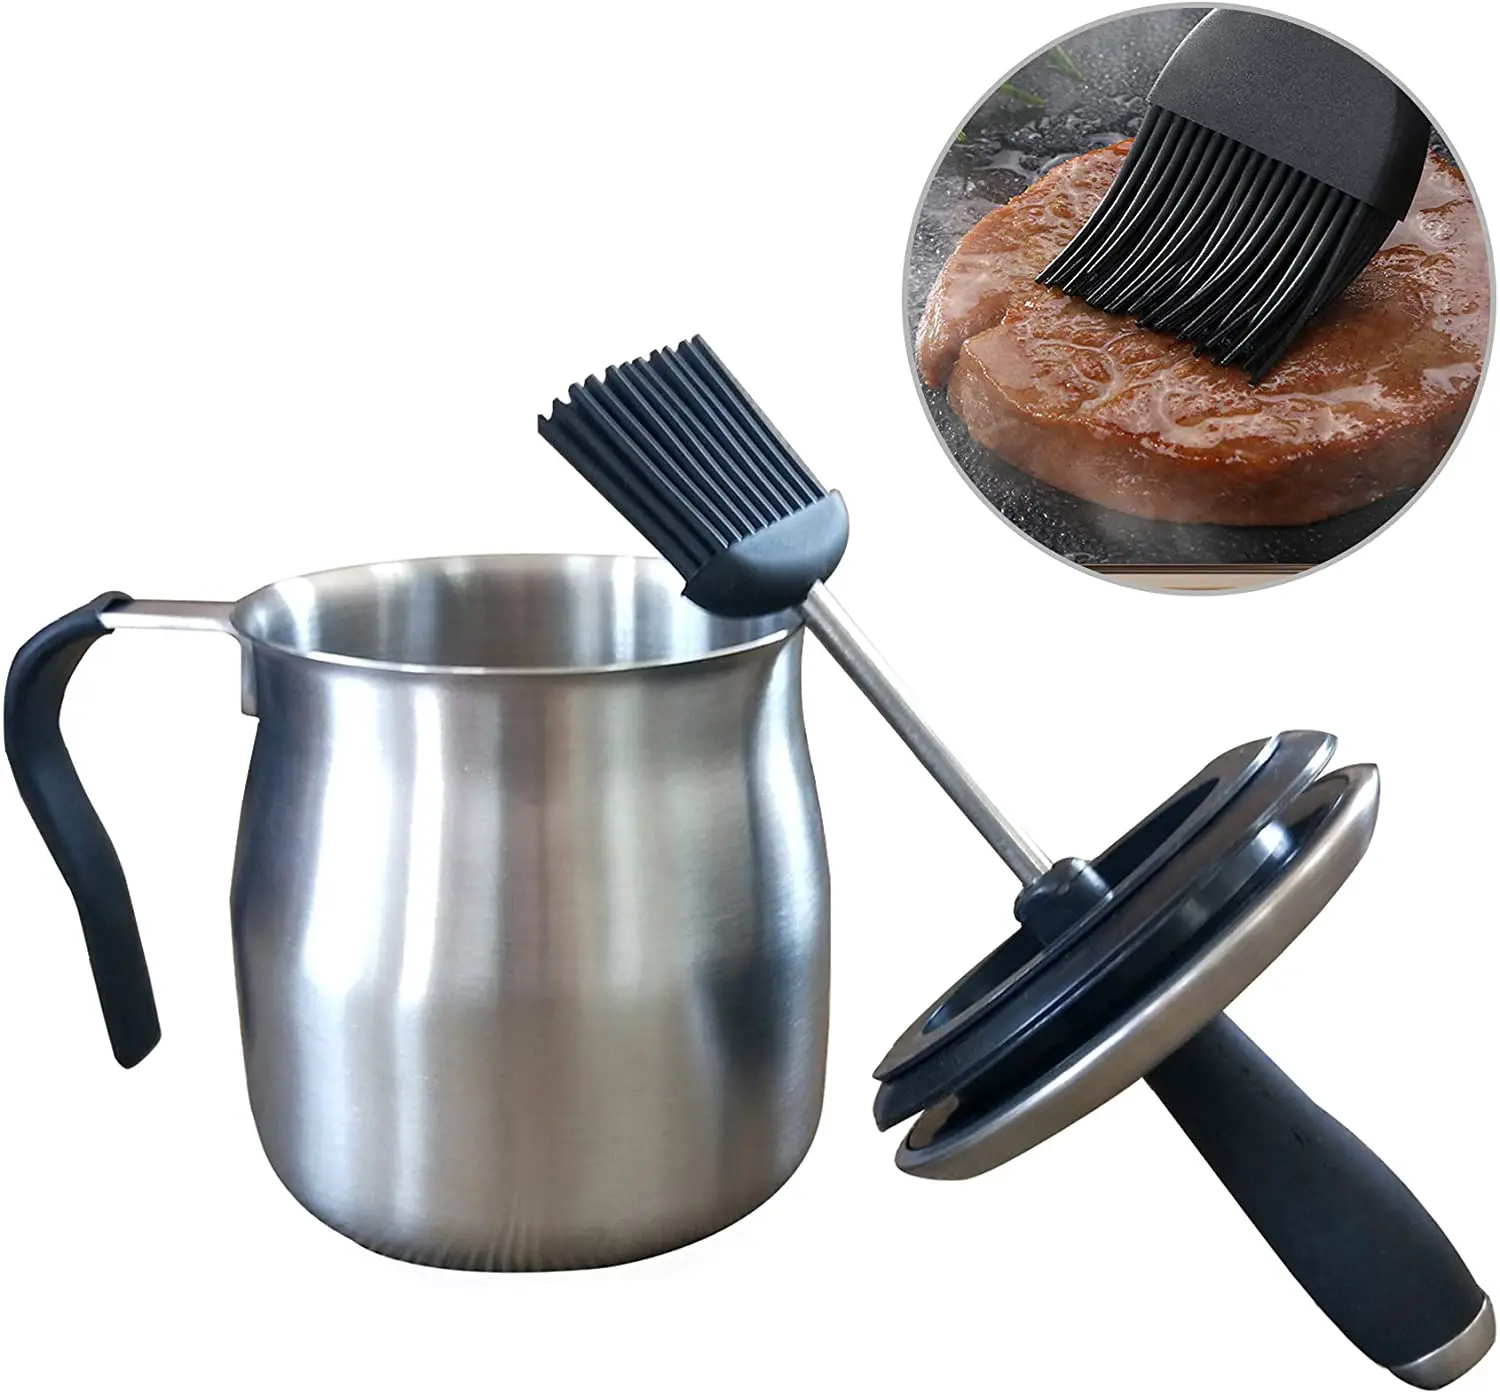 Amazon.com : Basting Brush and Sauce Pot Set for BBQ ...